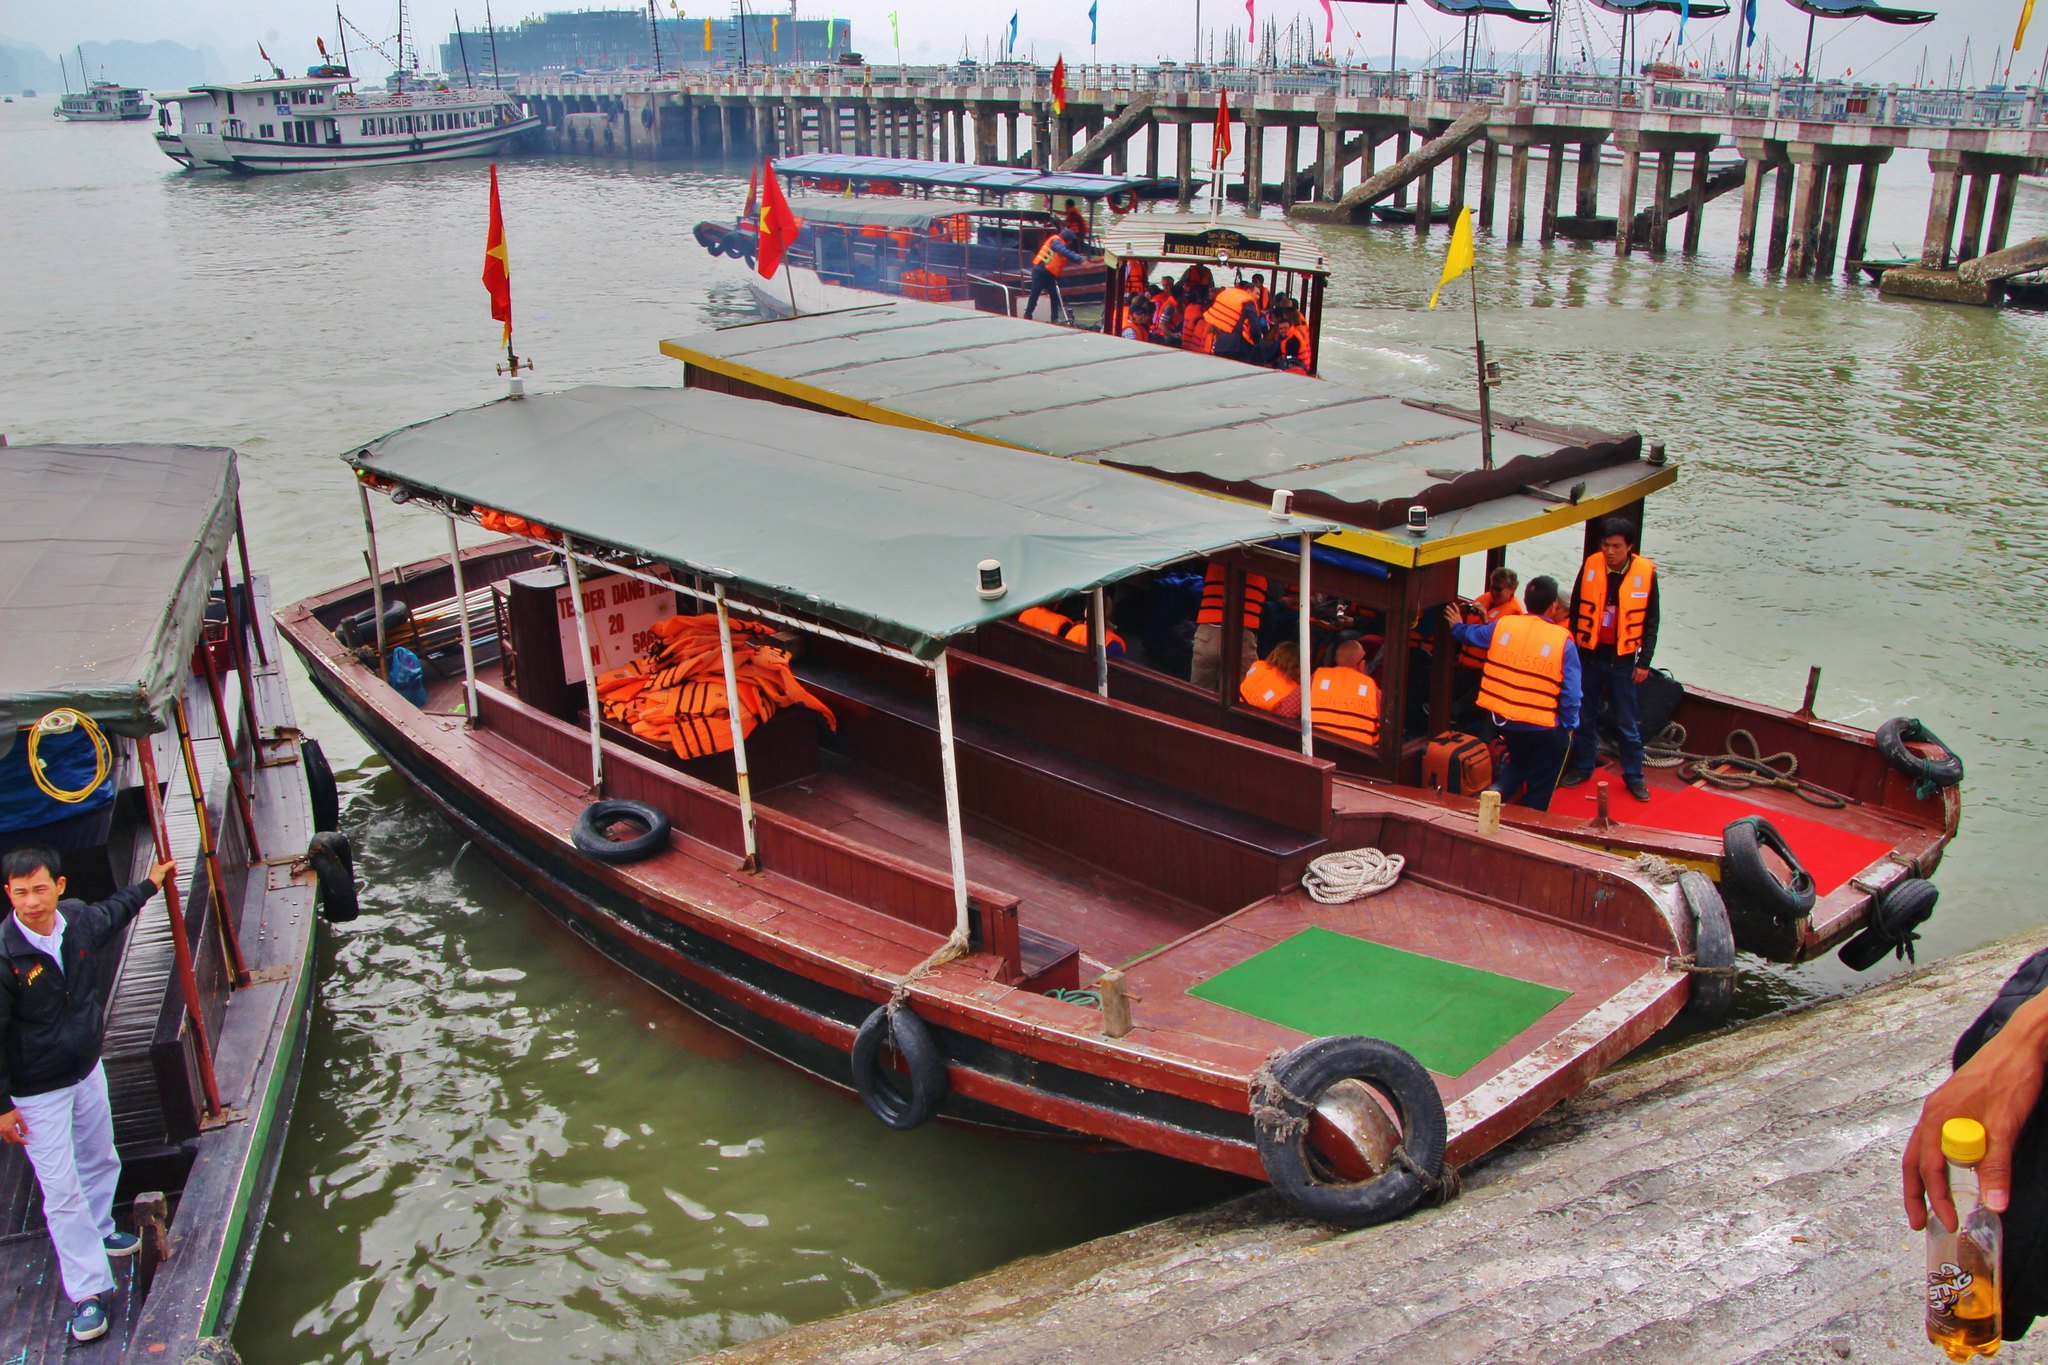 Cruising Ha Long Bay